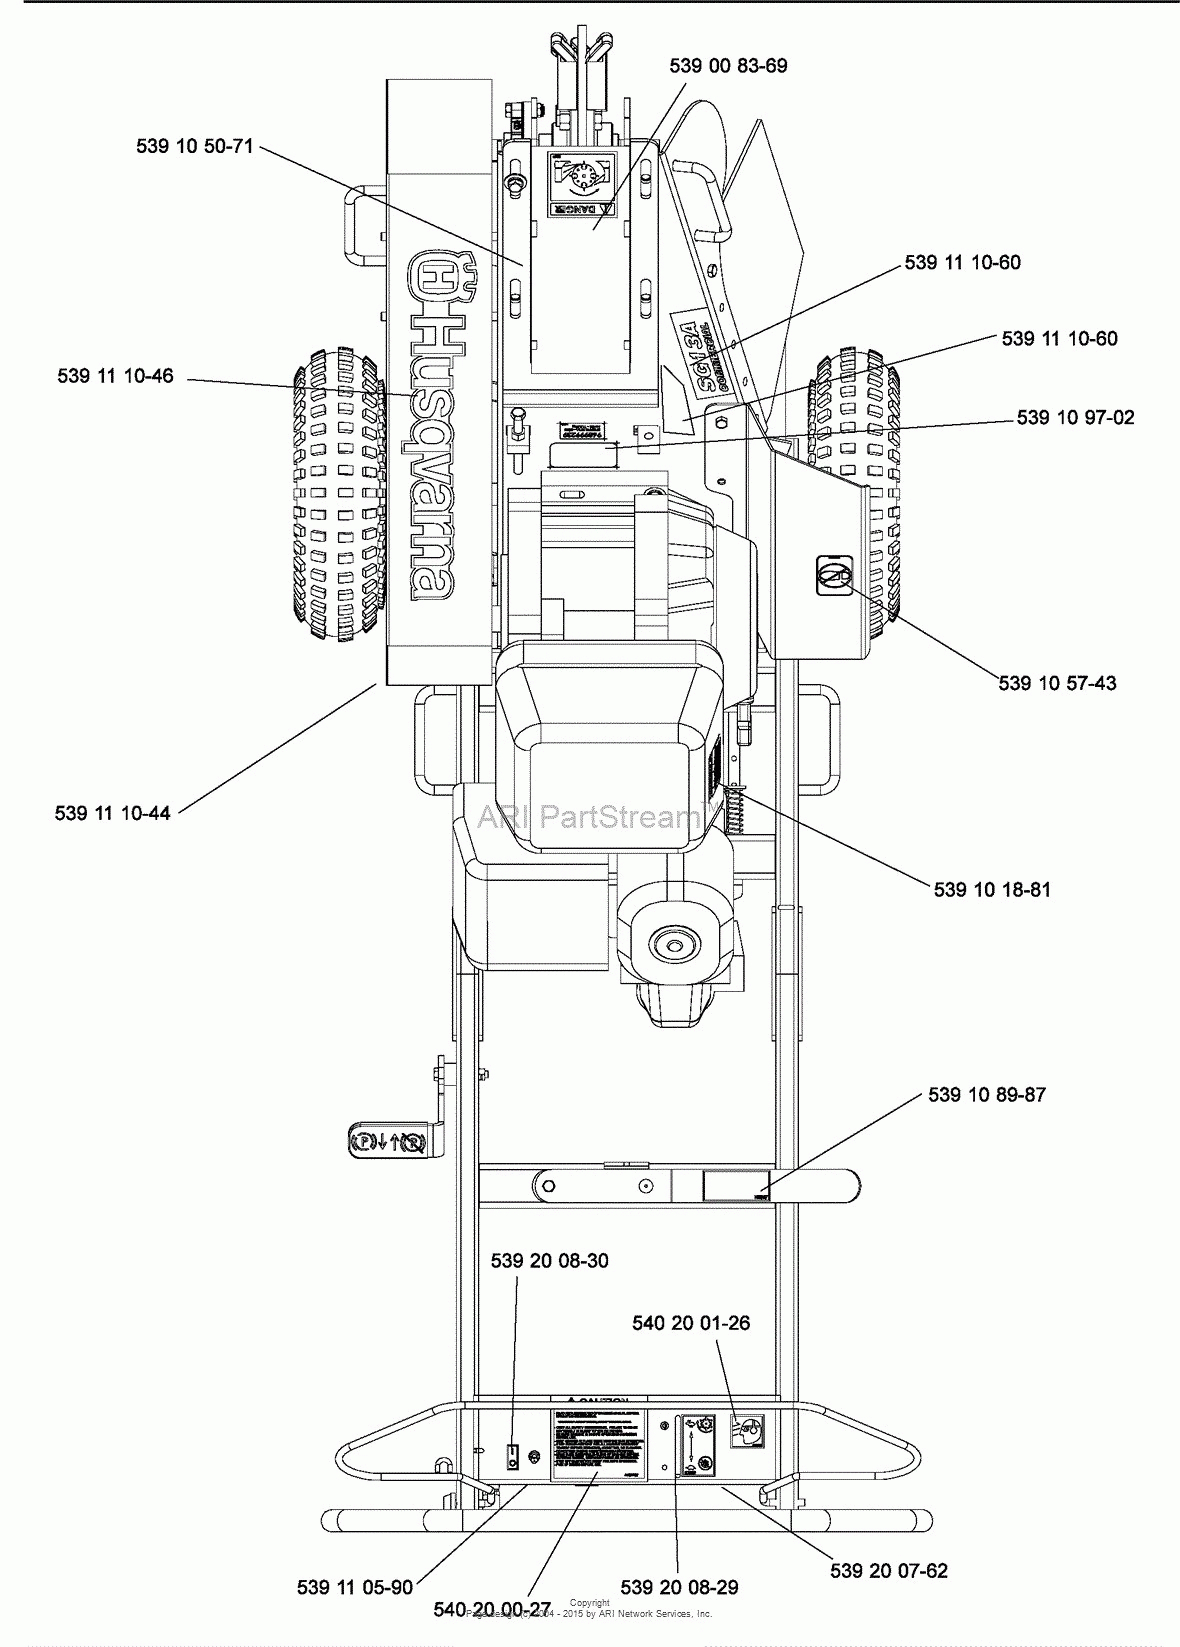 Honda Gx630 Wiring Diagram | Wiring Library - Honda Gx160 Electric Start Wiring Diagram